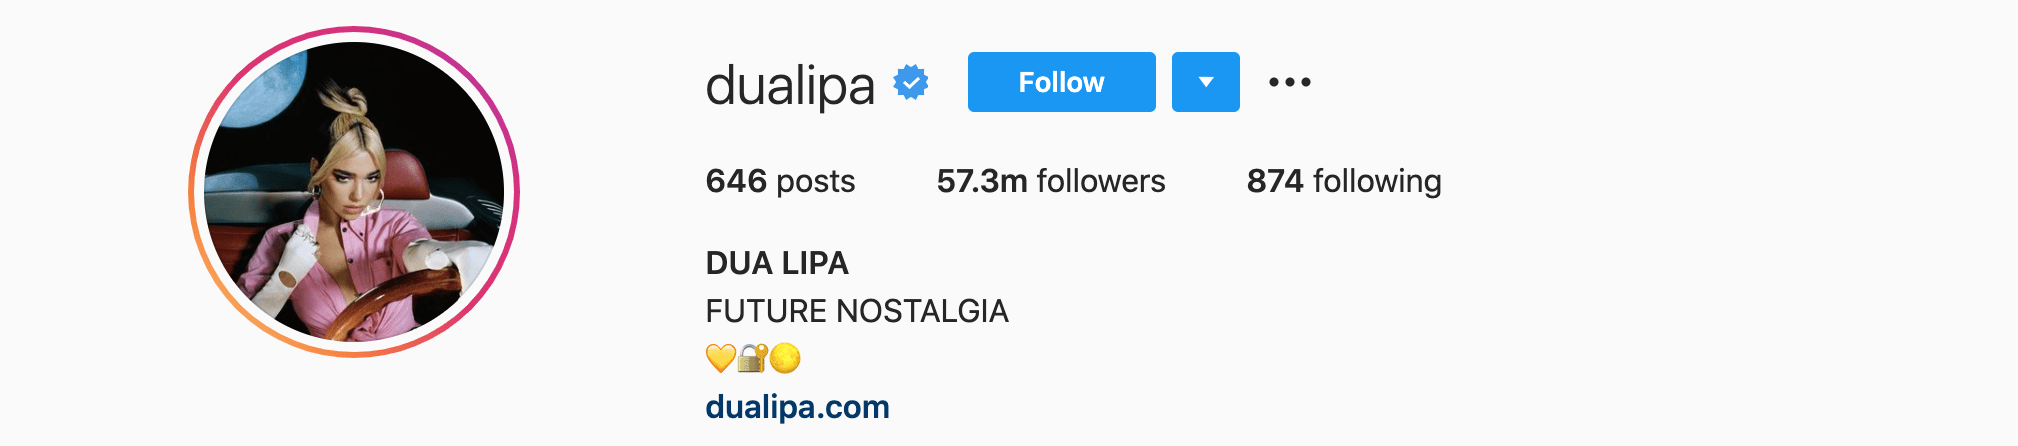 Top Instagram Influencers - DUA LIPA